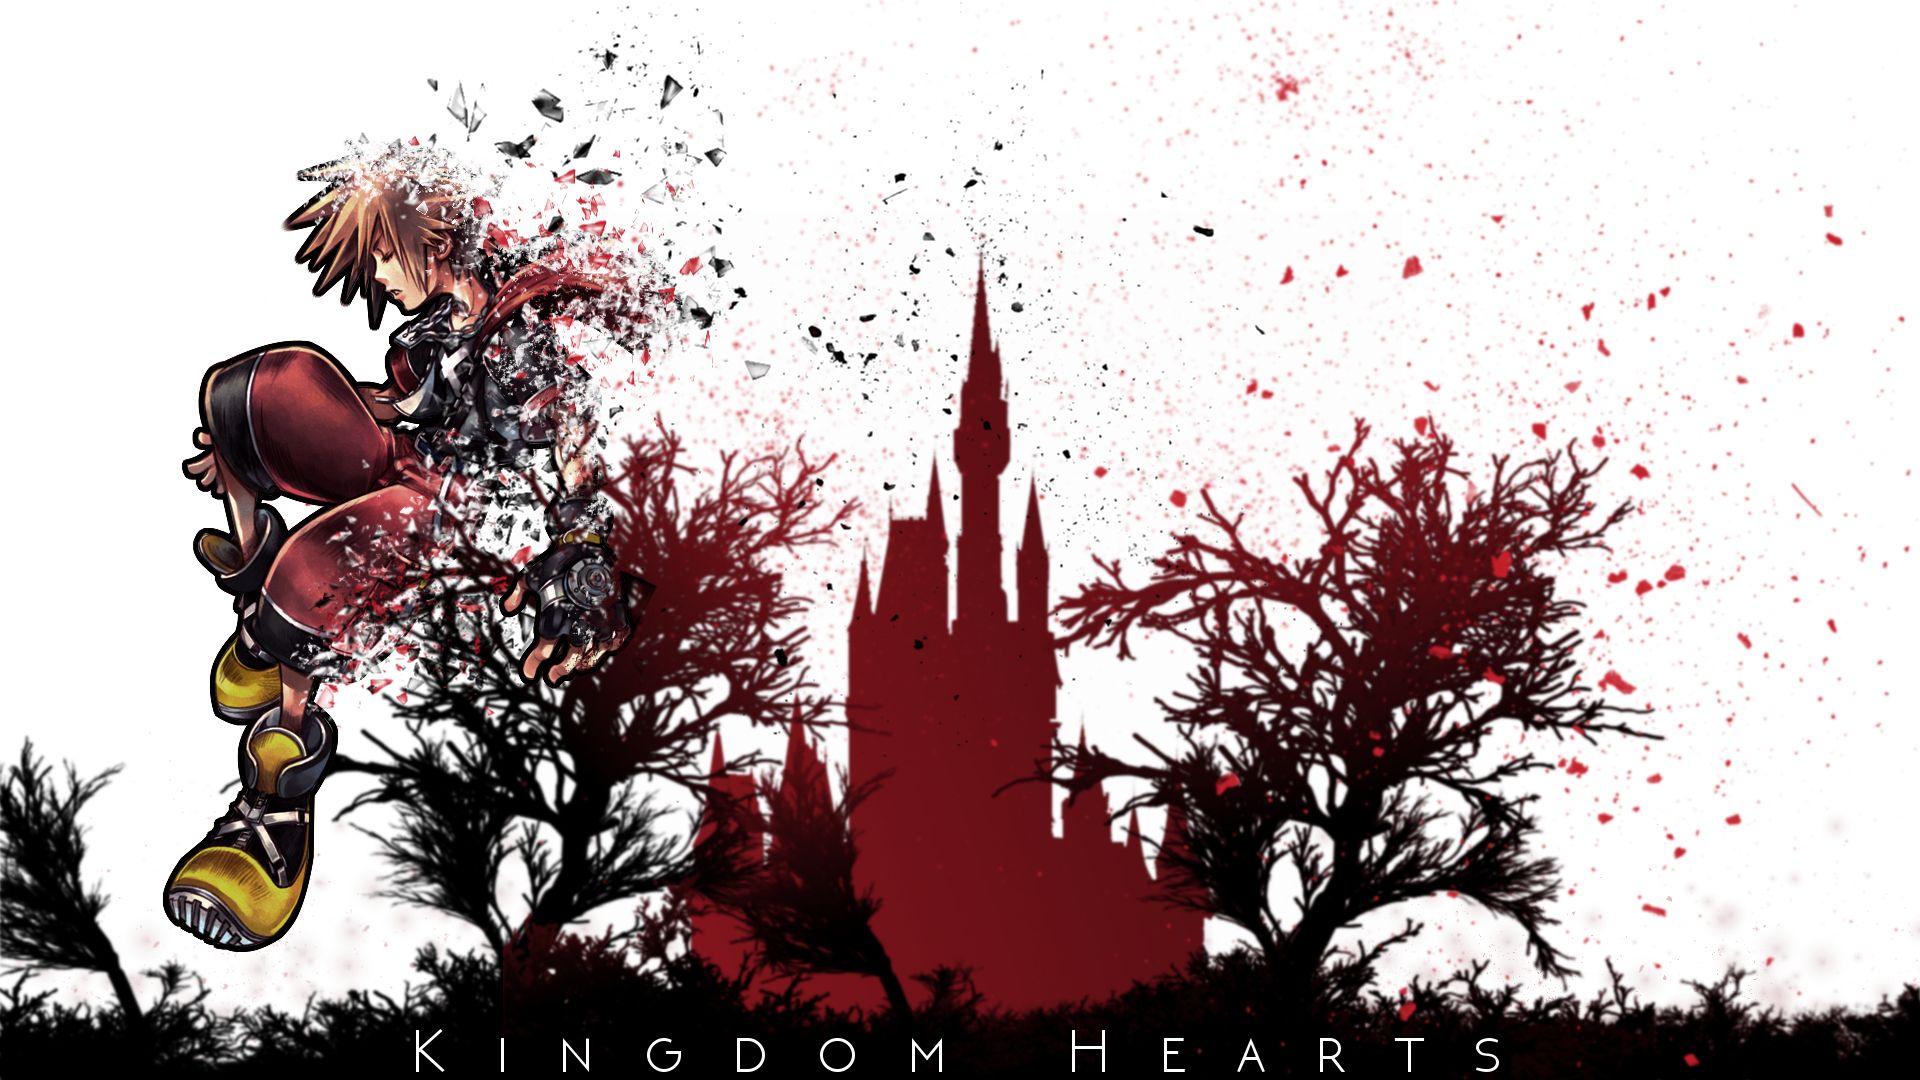 Kingdom Hearts Wallpaper - Sora in shards by StramboZ on DeviantArt